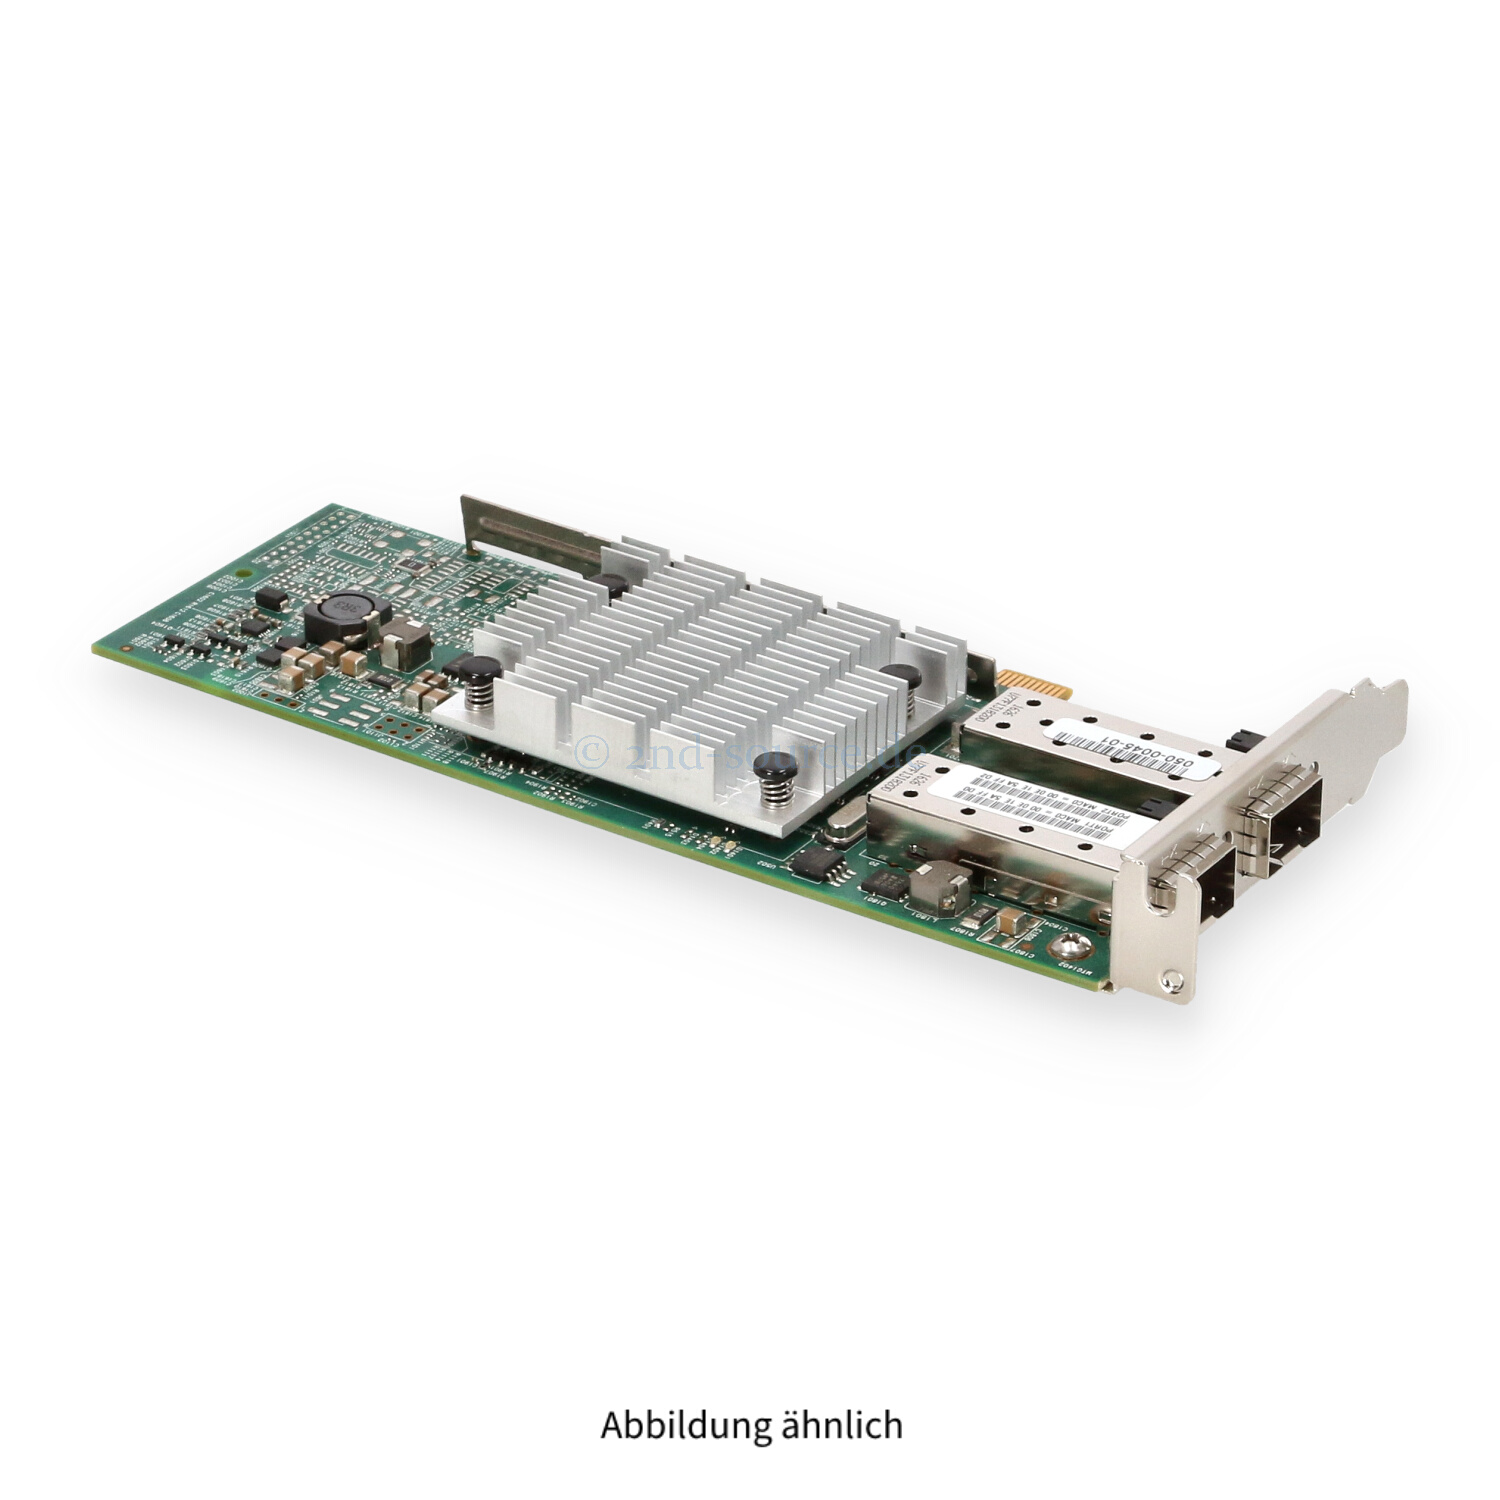 EMC Broadcom 957810A 2x SFP+ 10GbE PCIe x8 Server Ethernet Adapter Low Profile 050-0045-01 BC0210406-01